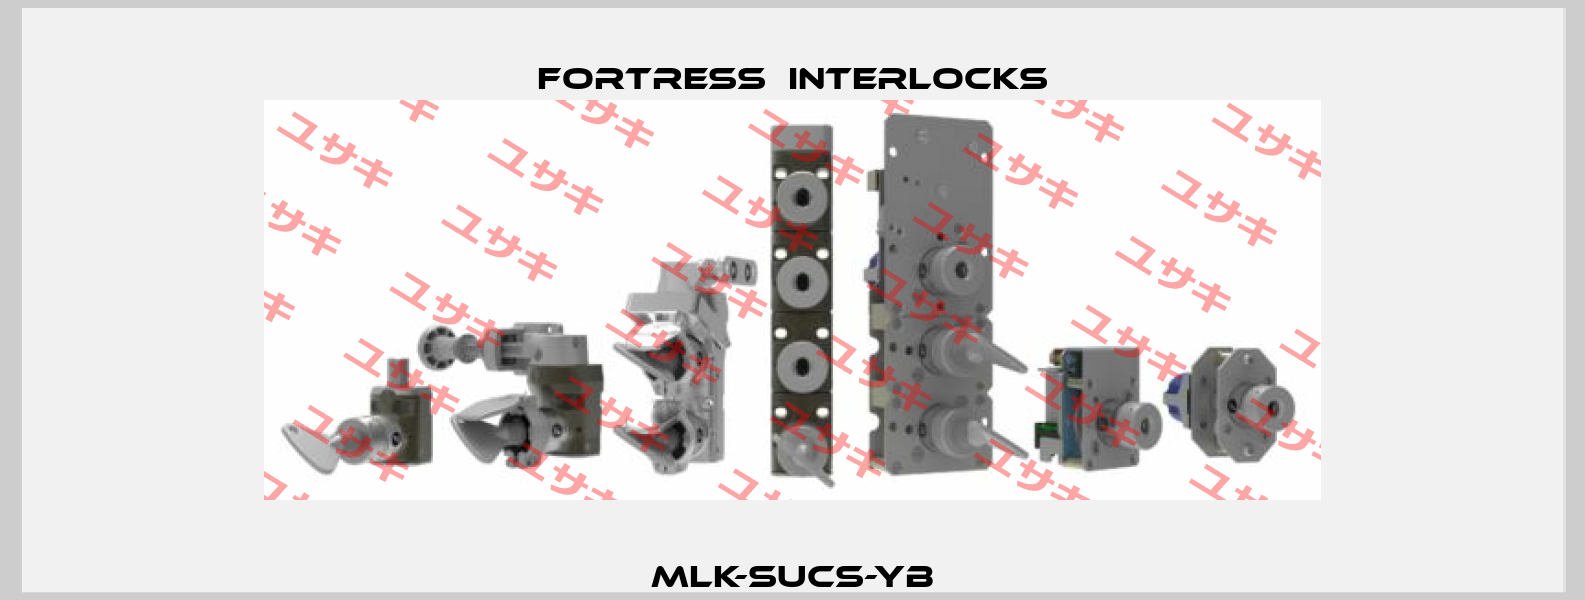 MLK-SUCS-YB Fortress